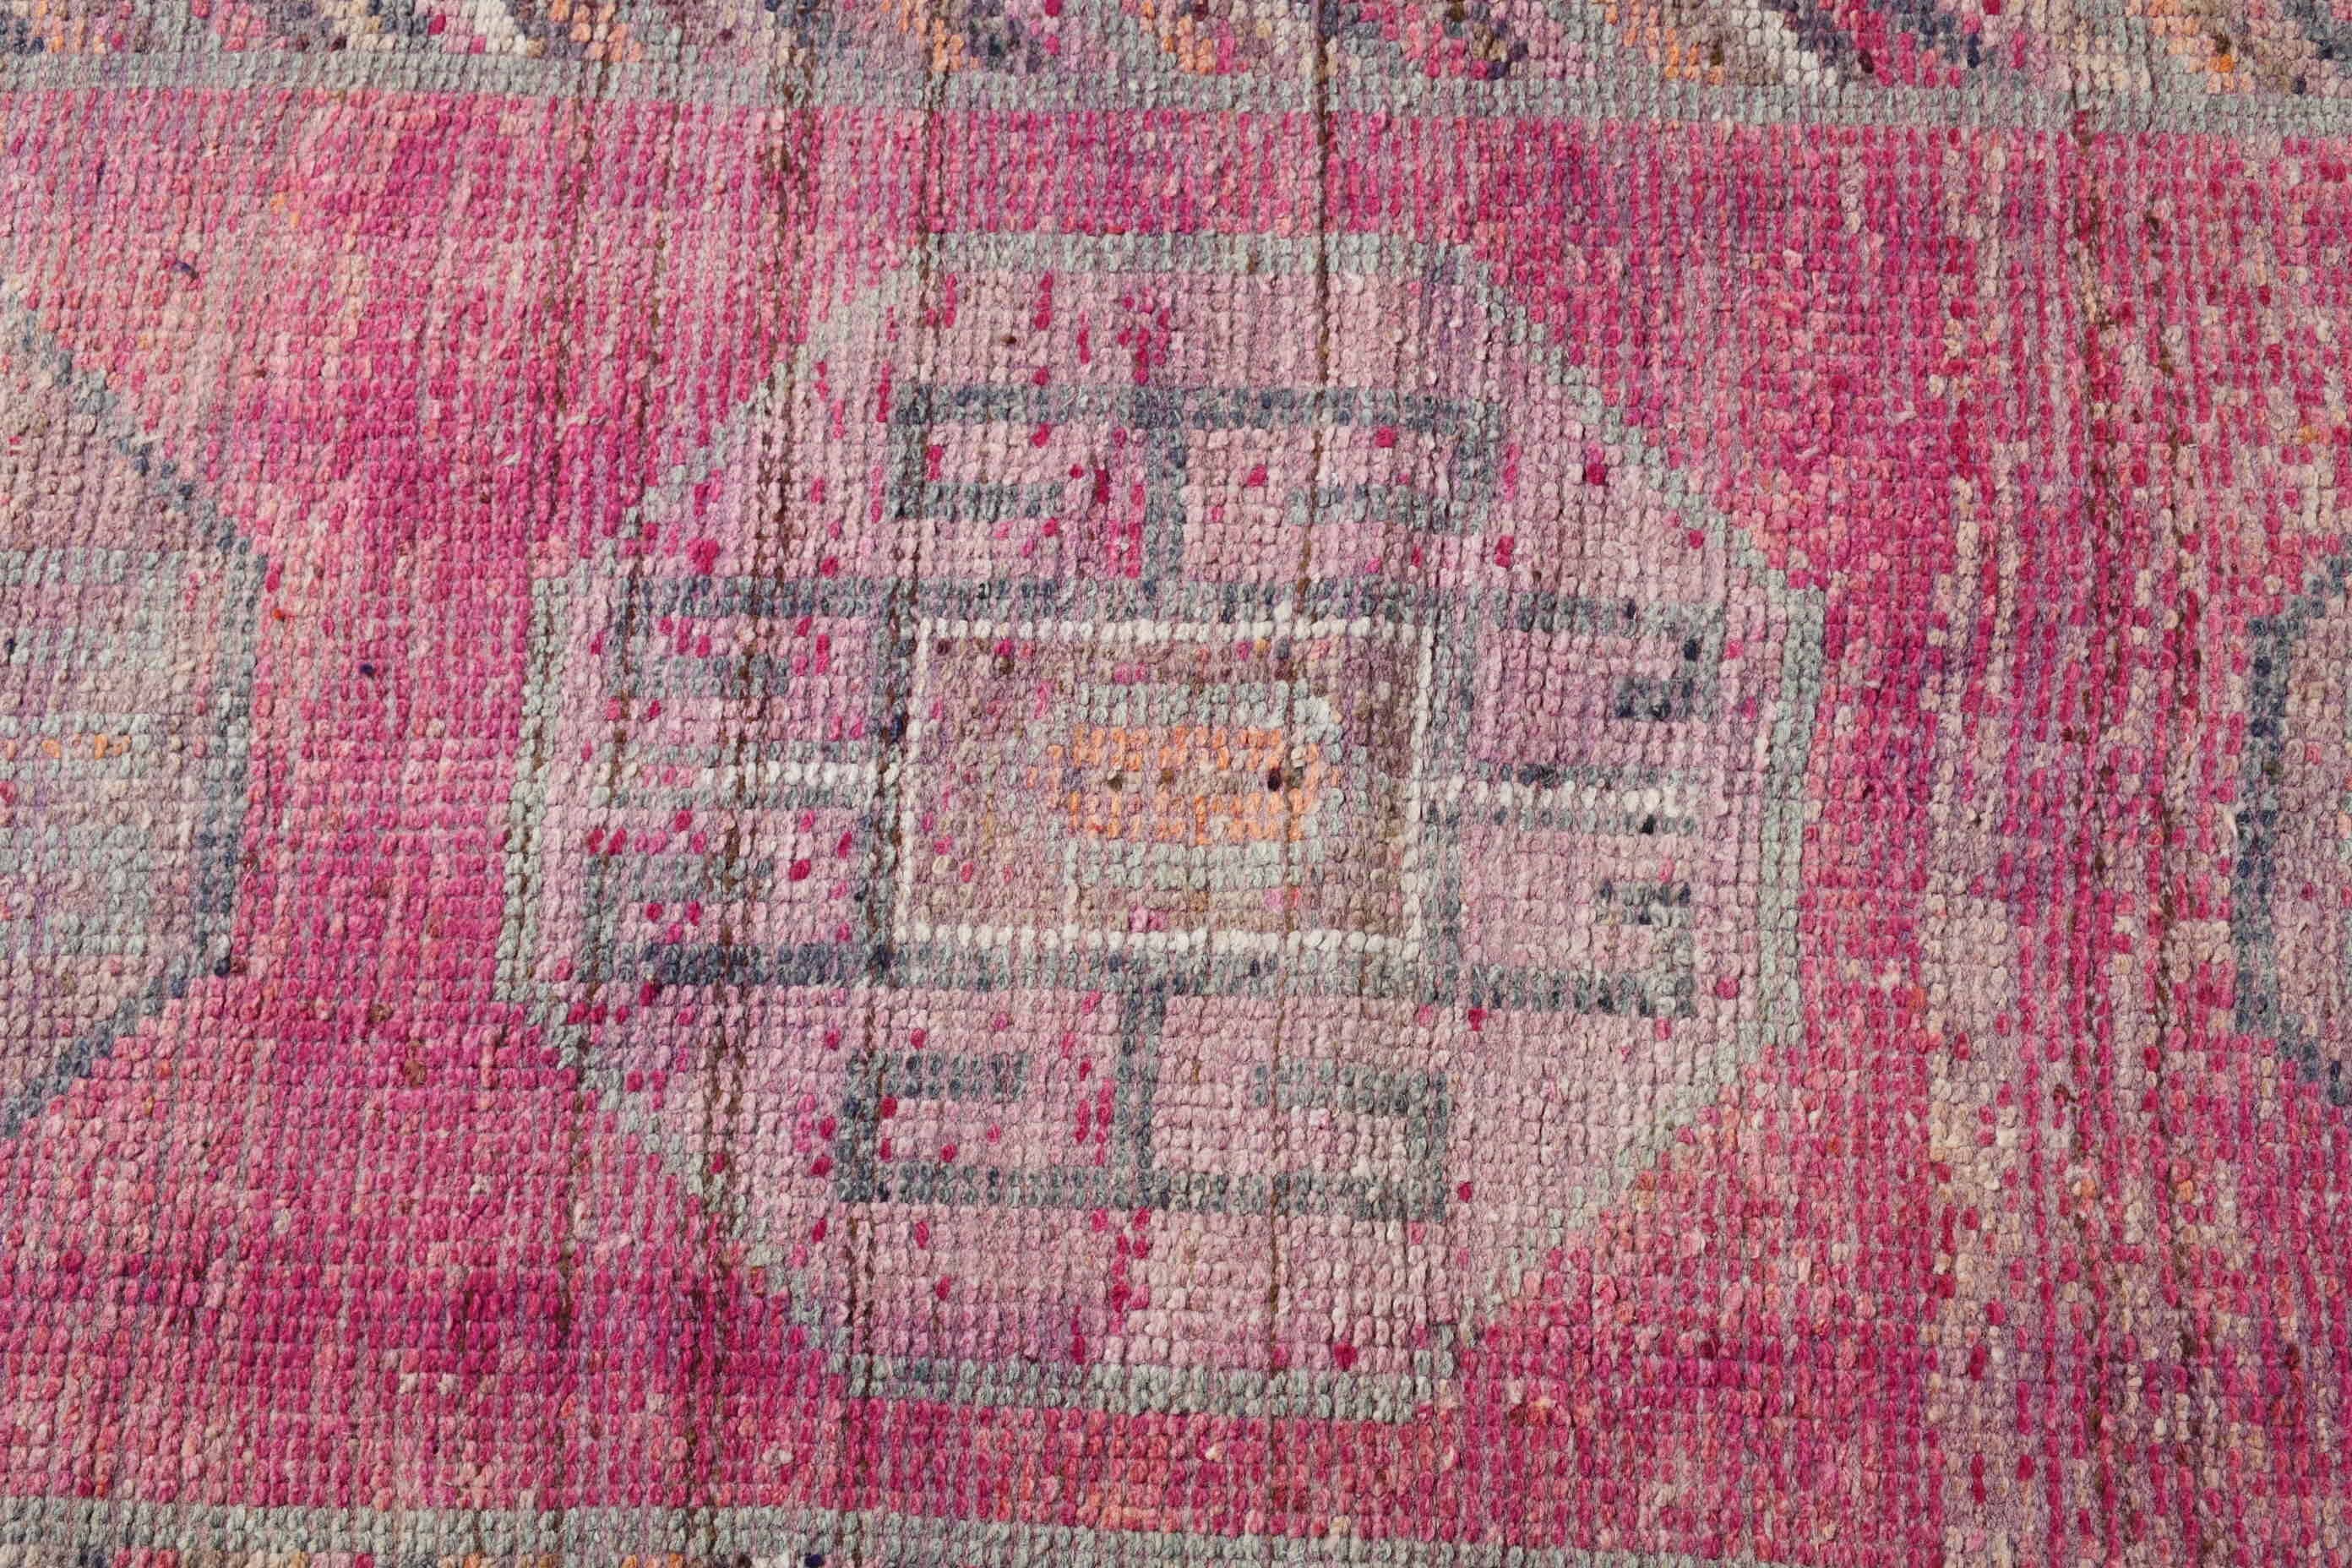 Kitchen Rug, Bedroom Rug, Turkish Rugs, Vintage Rugs, Rugs for Hallway, 2.7x10.2 ft Runner Rug, Oushak Rug, Hallway Rug, Pink Moroccan Rug